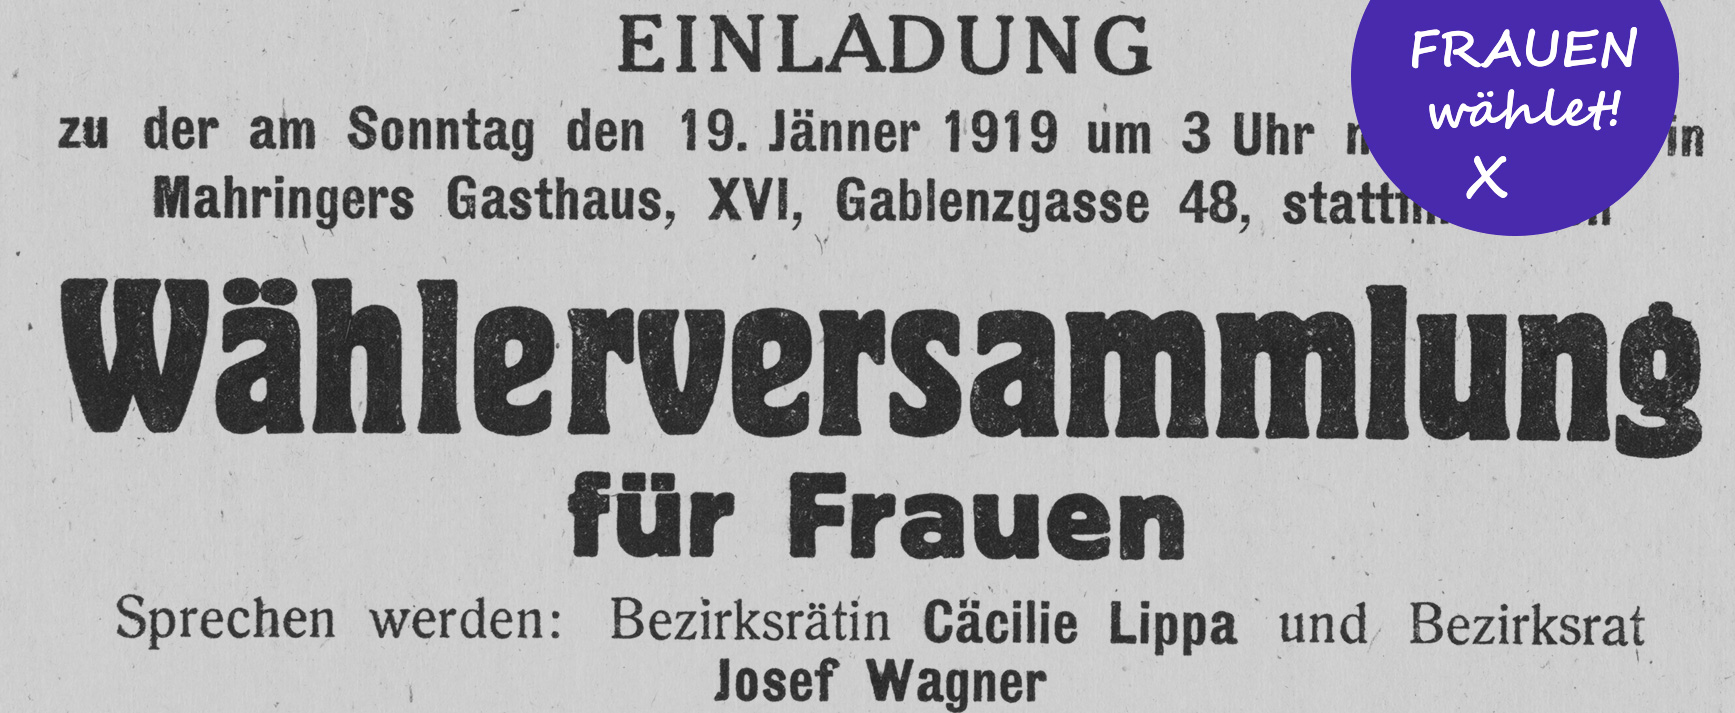 Einladung zur Wählerversammlung für Frauen, Jänner 1919 (Flugblatt)